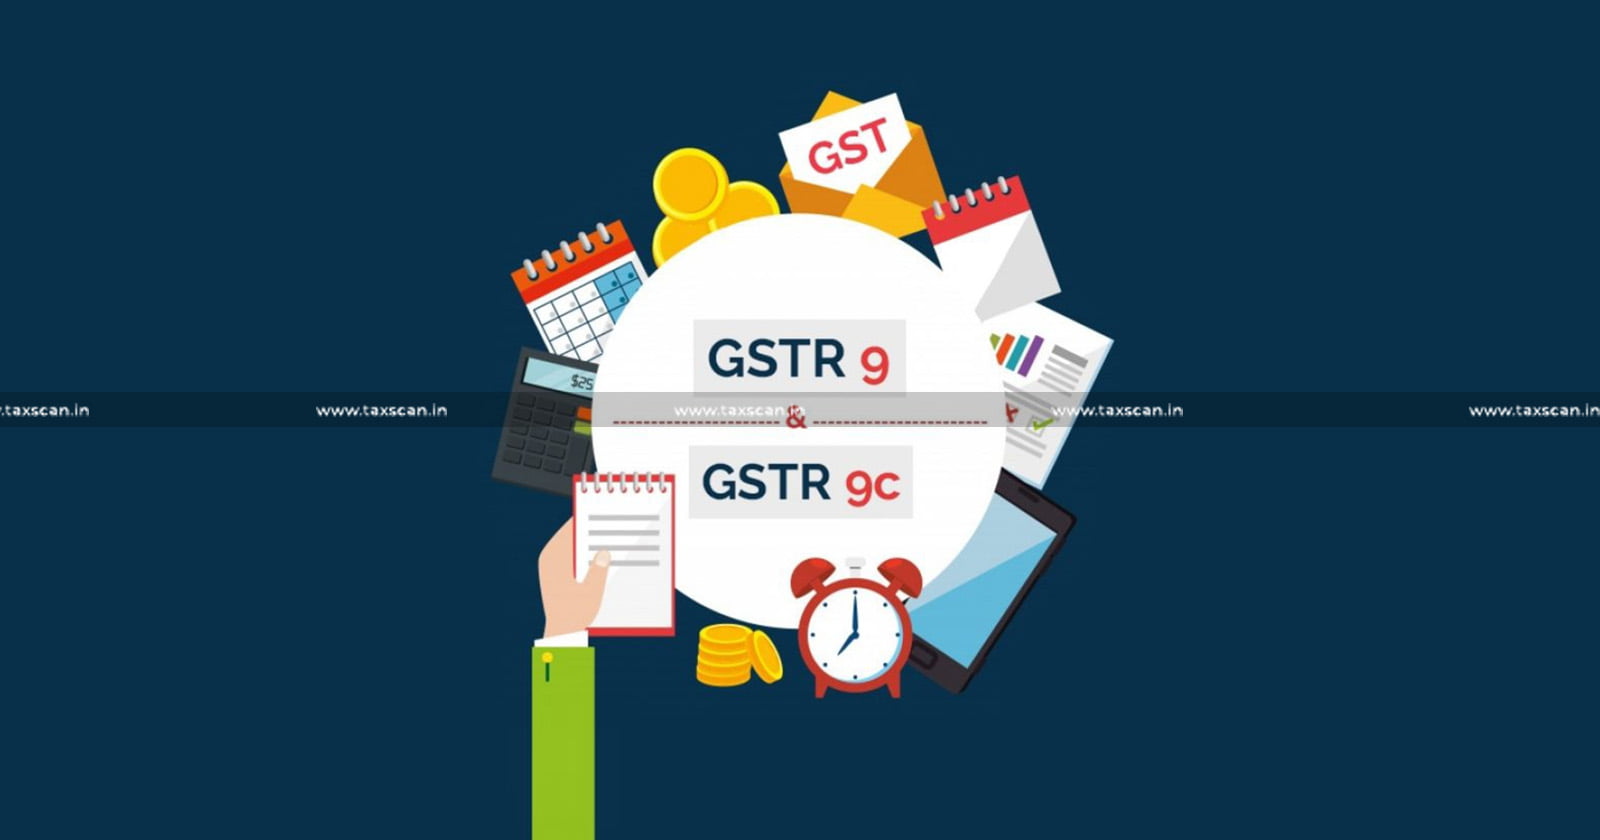 GSTR-9 and GSTR-9C - GSTR-9 - GSTR-9C - GSTR - Offline Tool - statement Preparation - taxscan